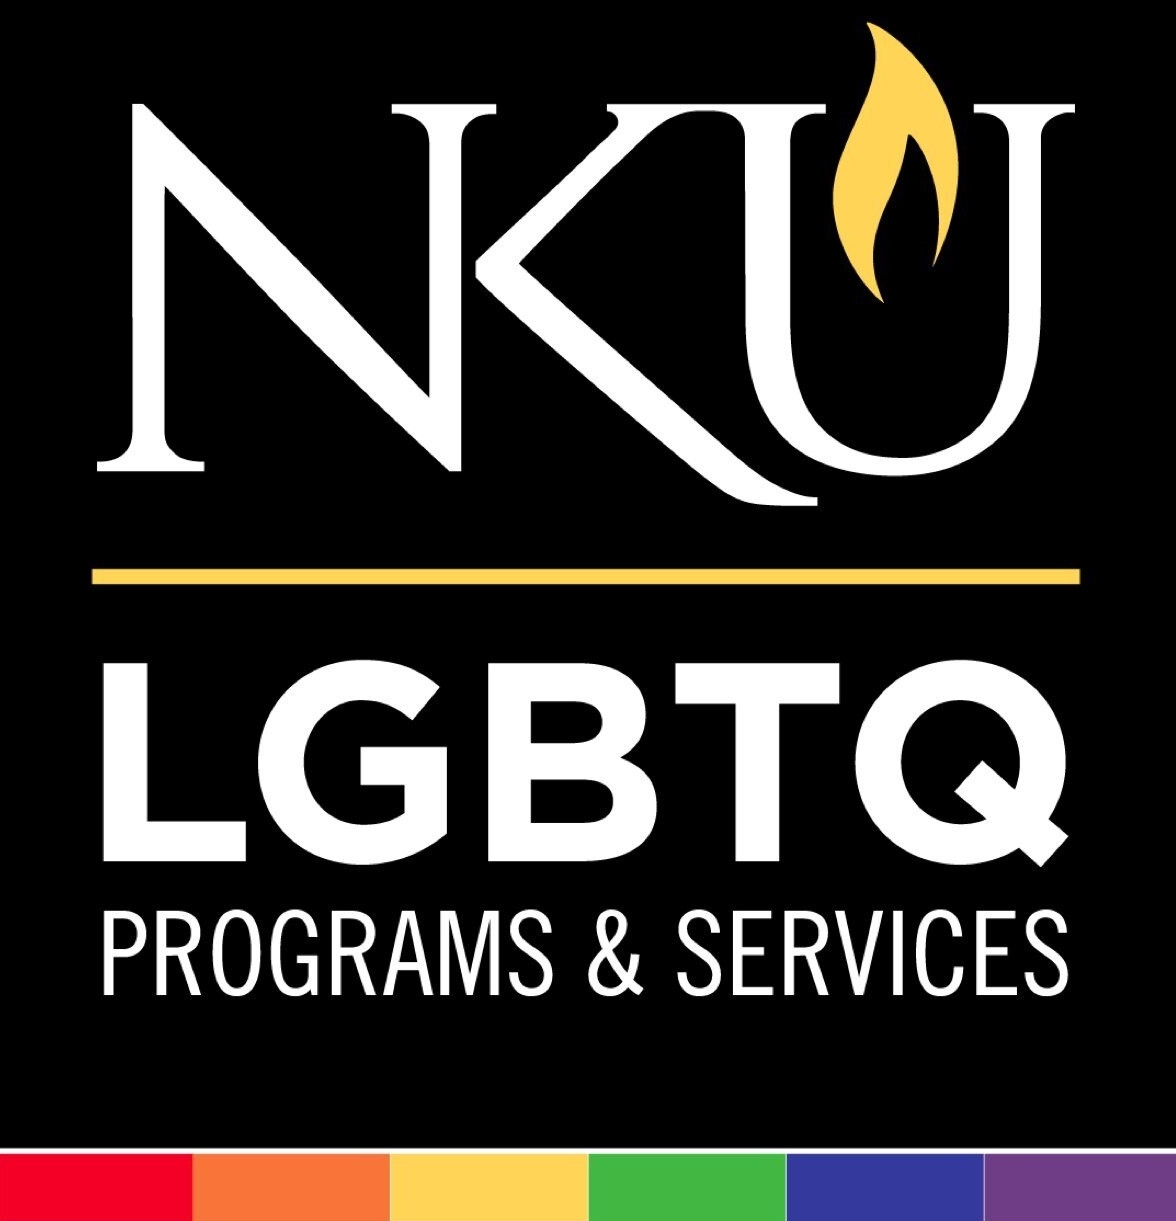 LGBTQ Programs & Services